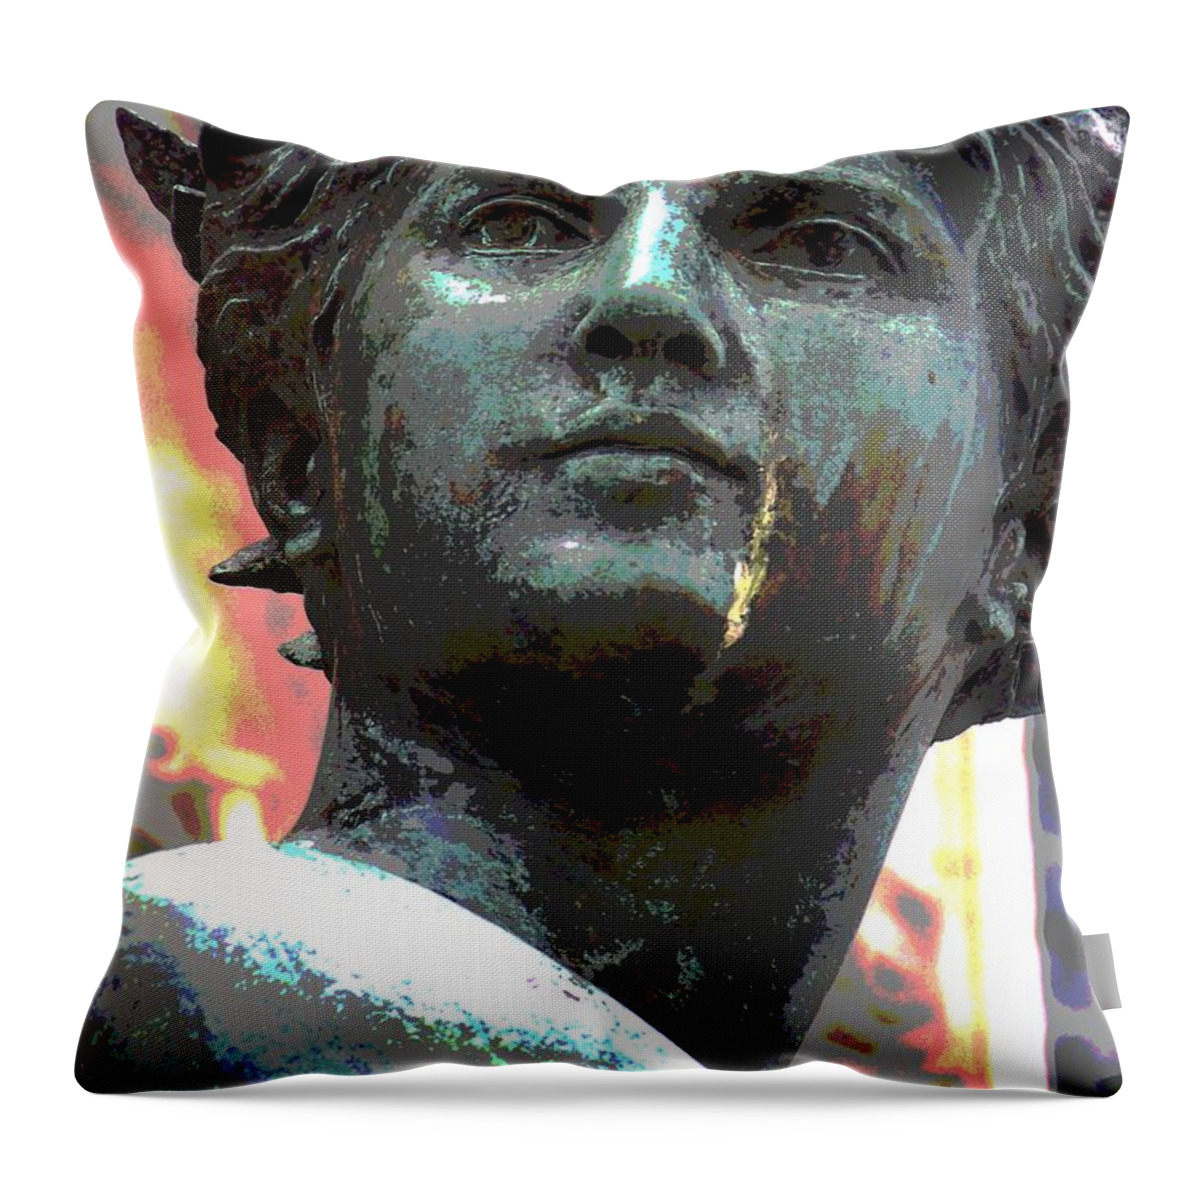  Throw Pillow featuring the photograph Statue - Paris - France by Francoise Leandre